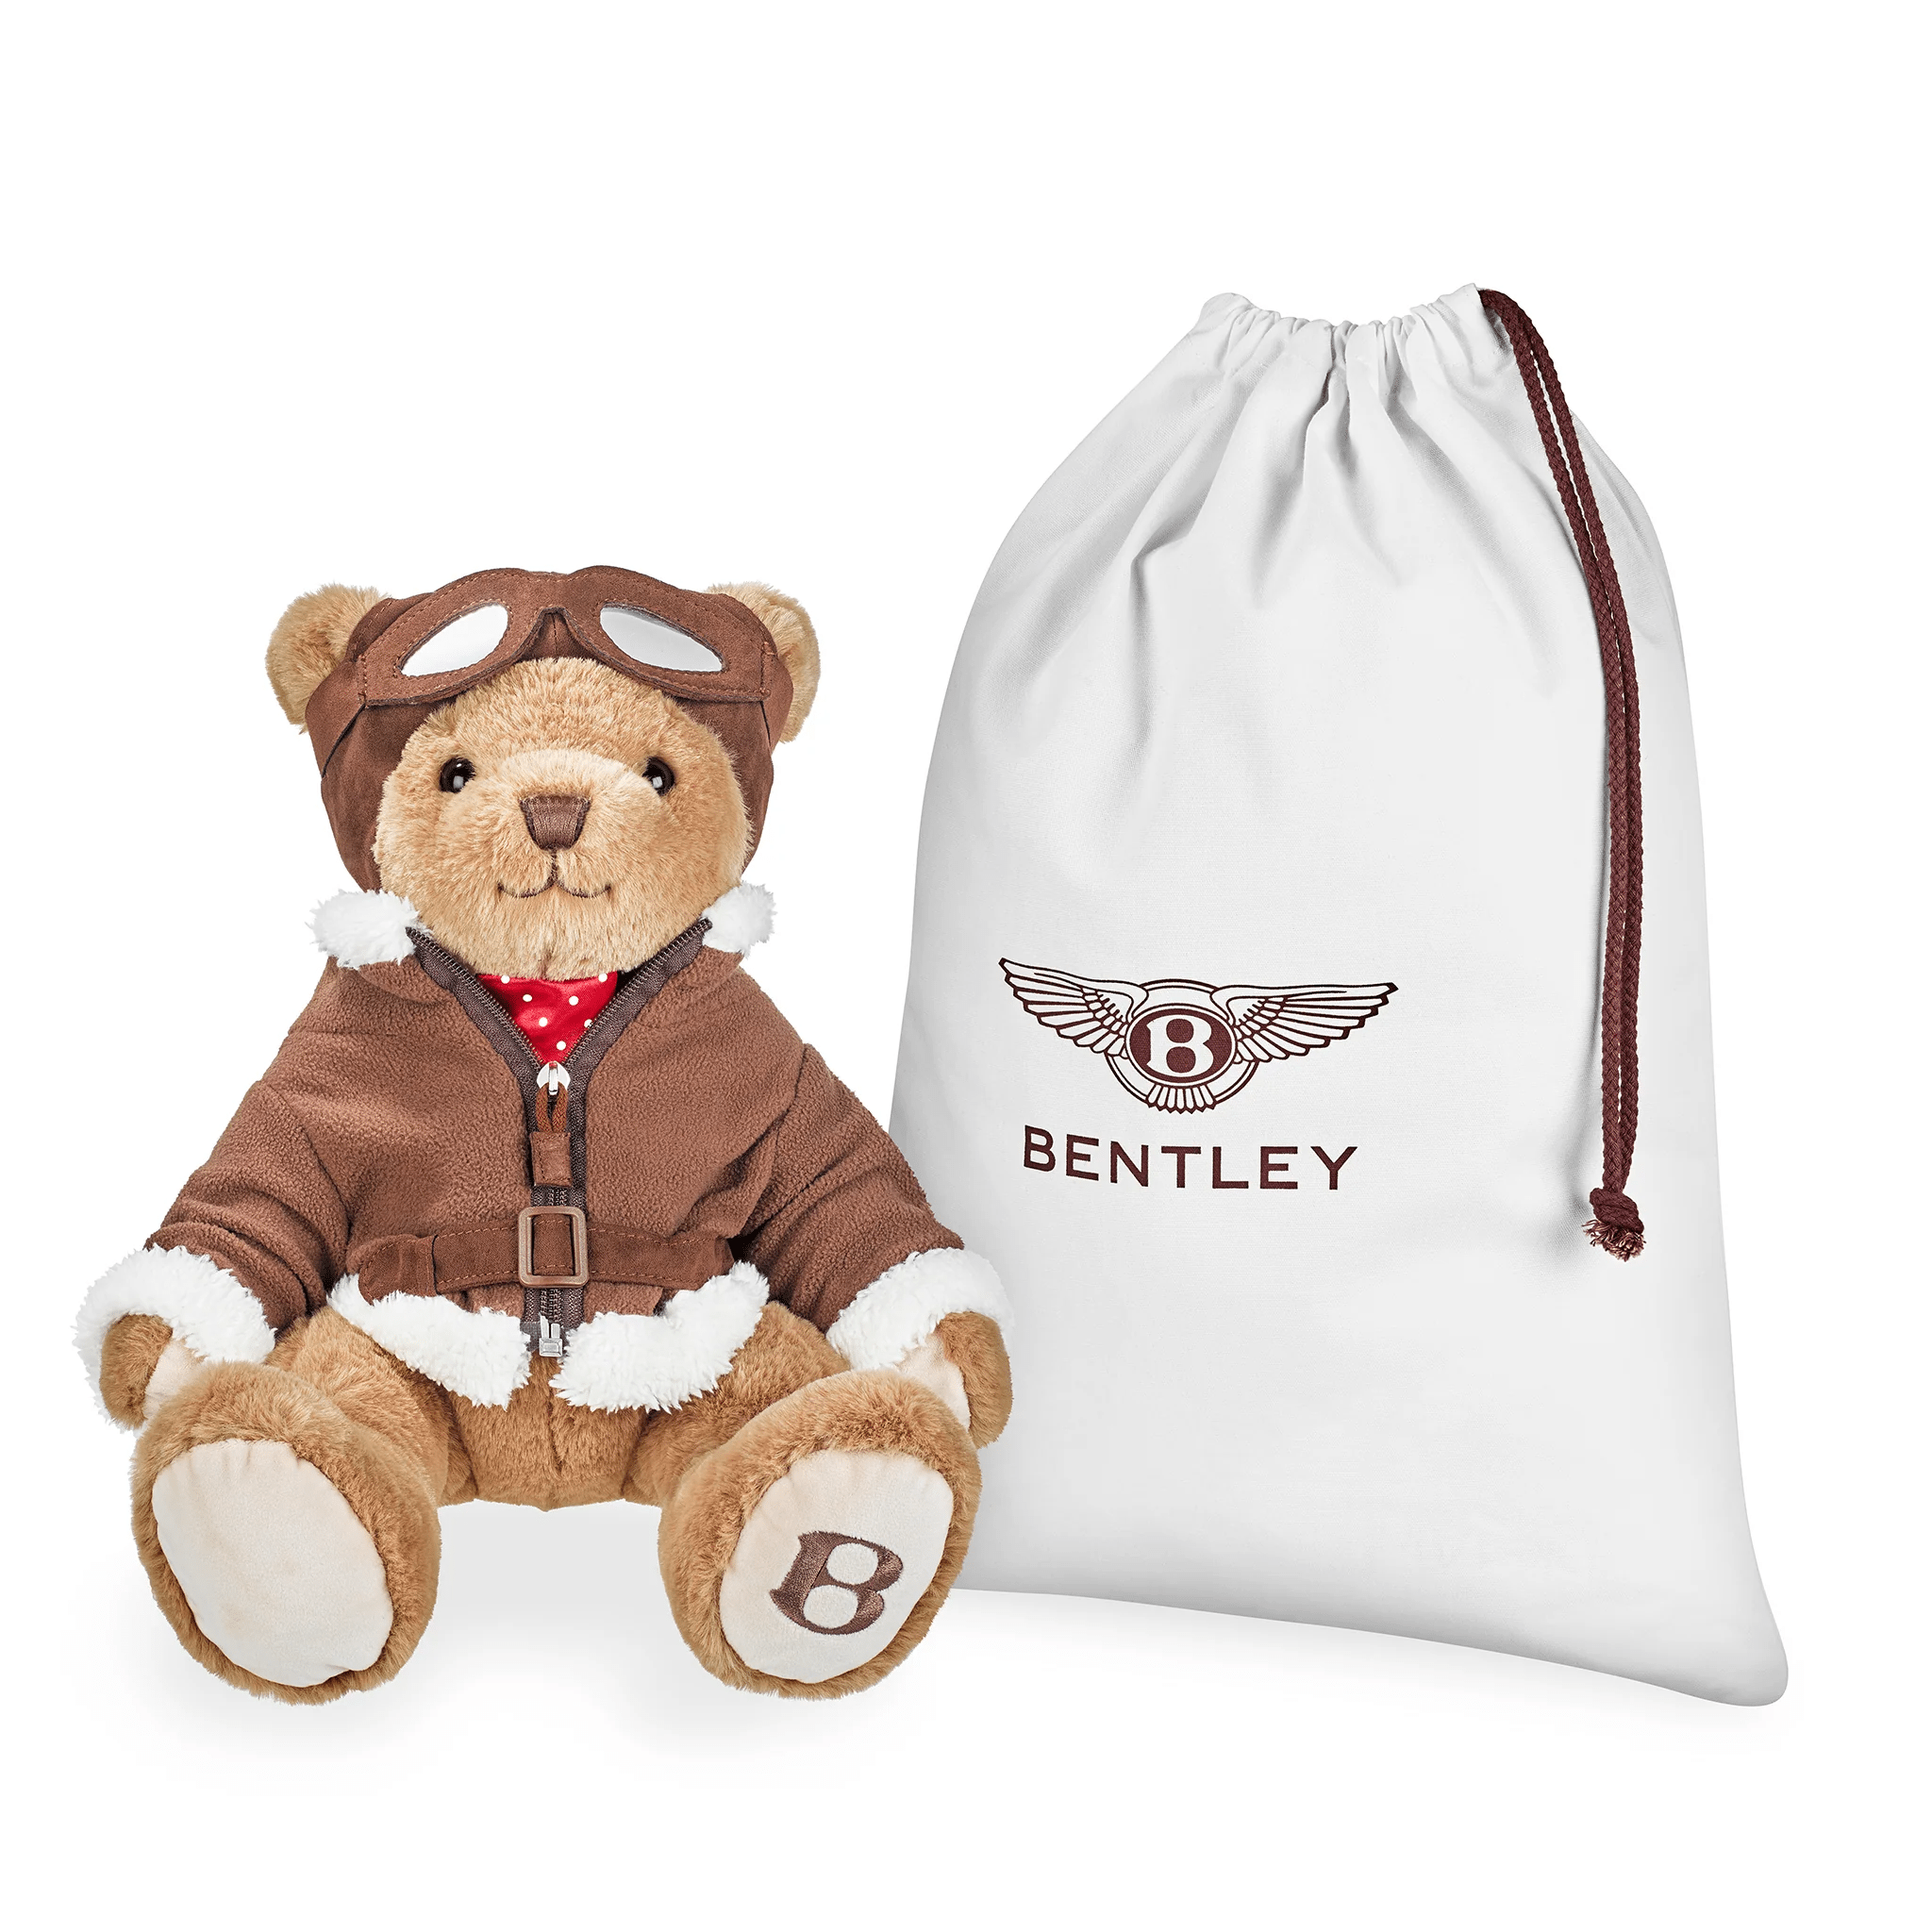 Bentley Teddy Bears